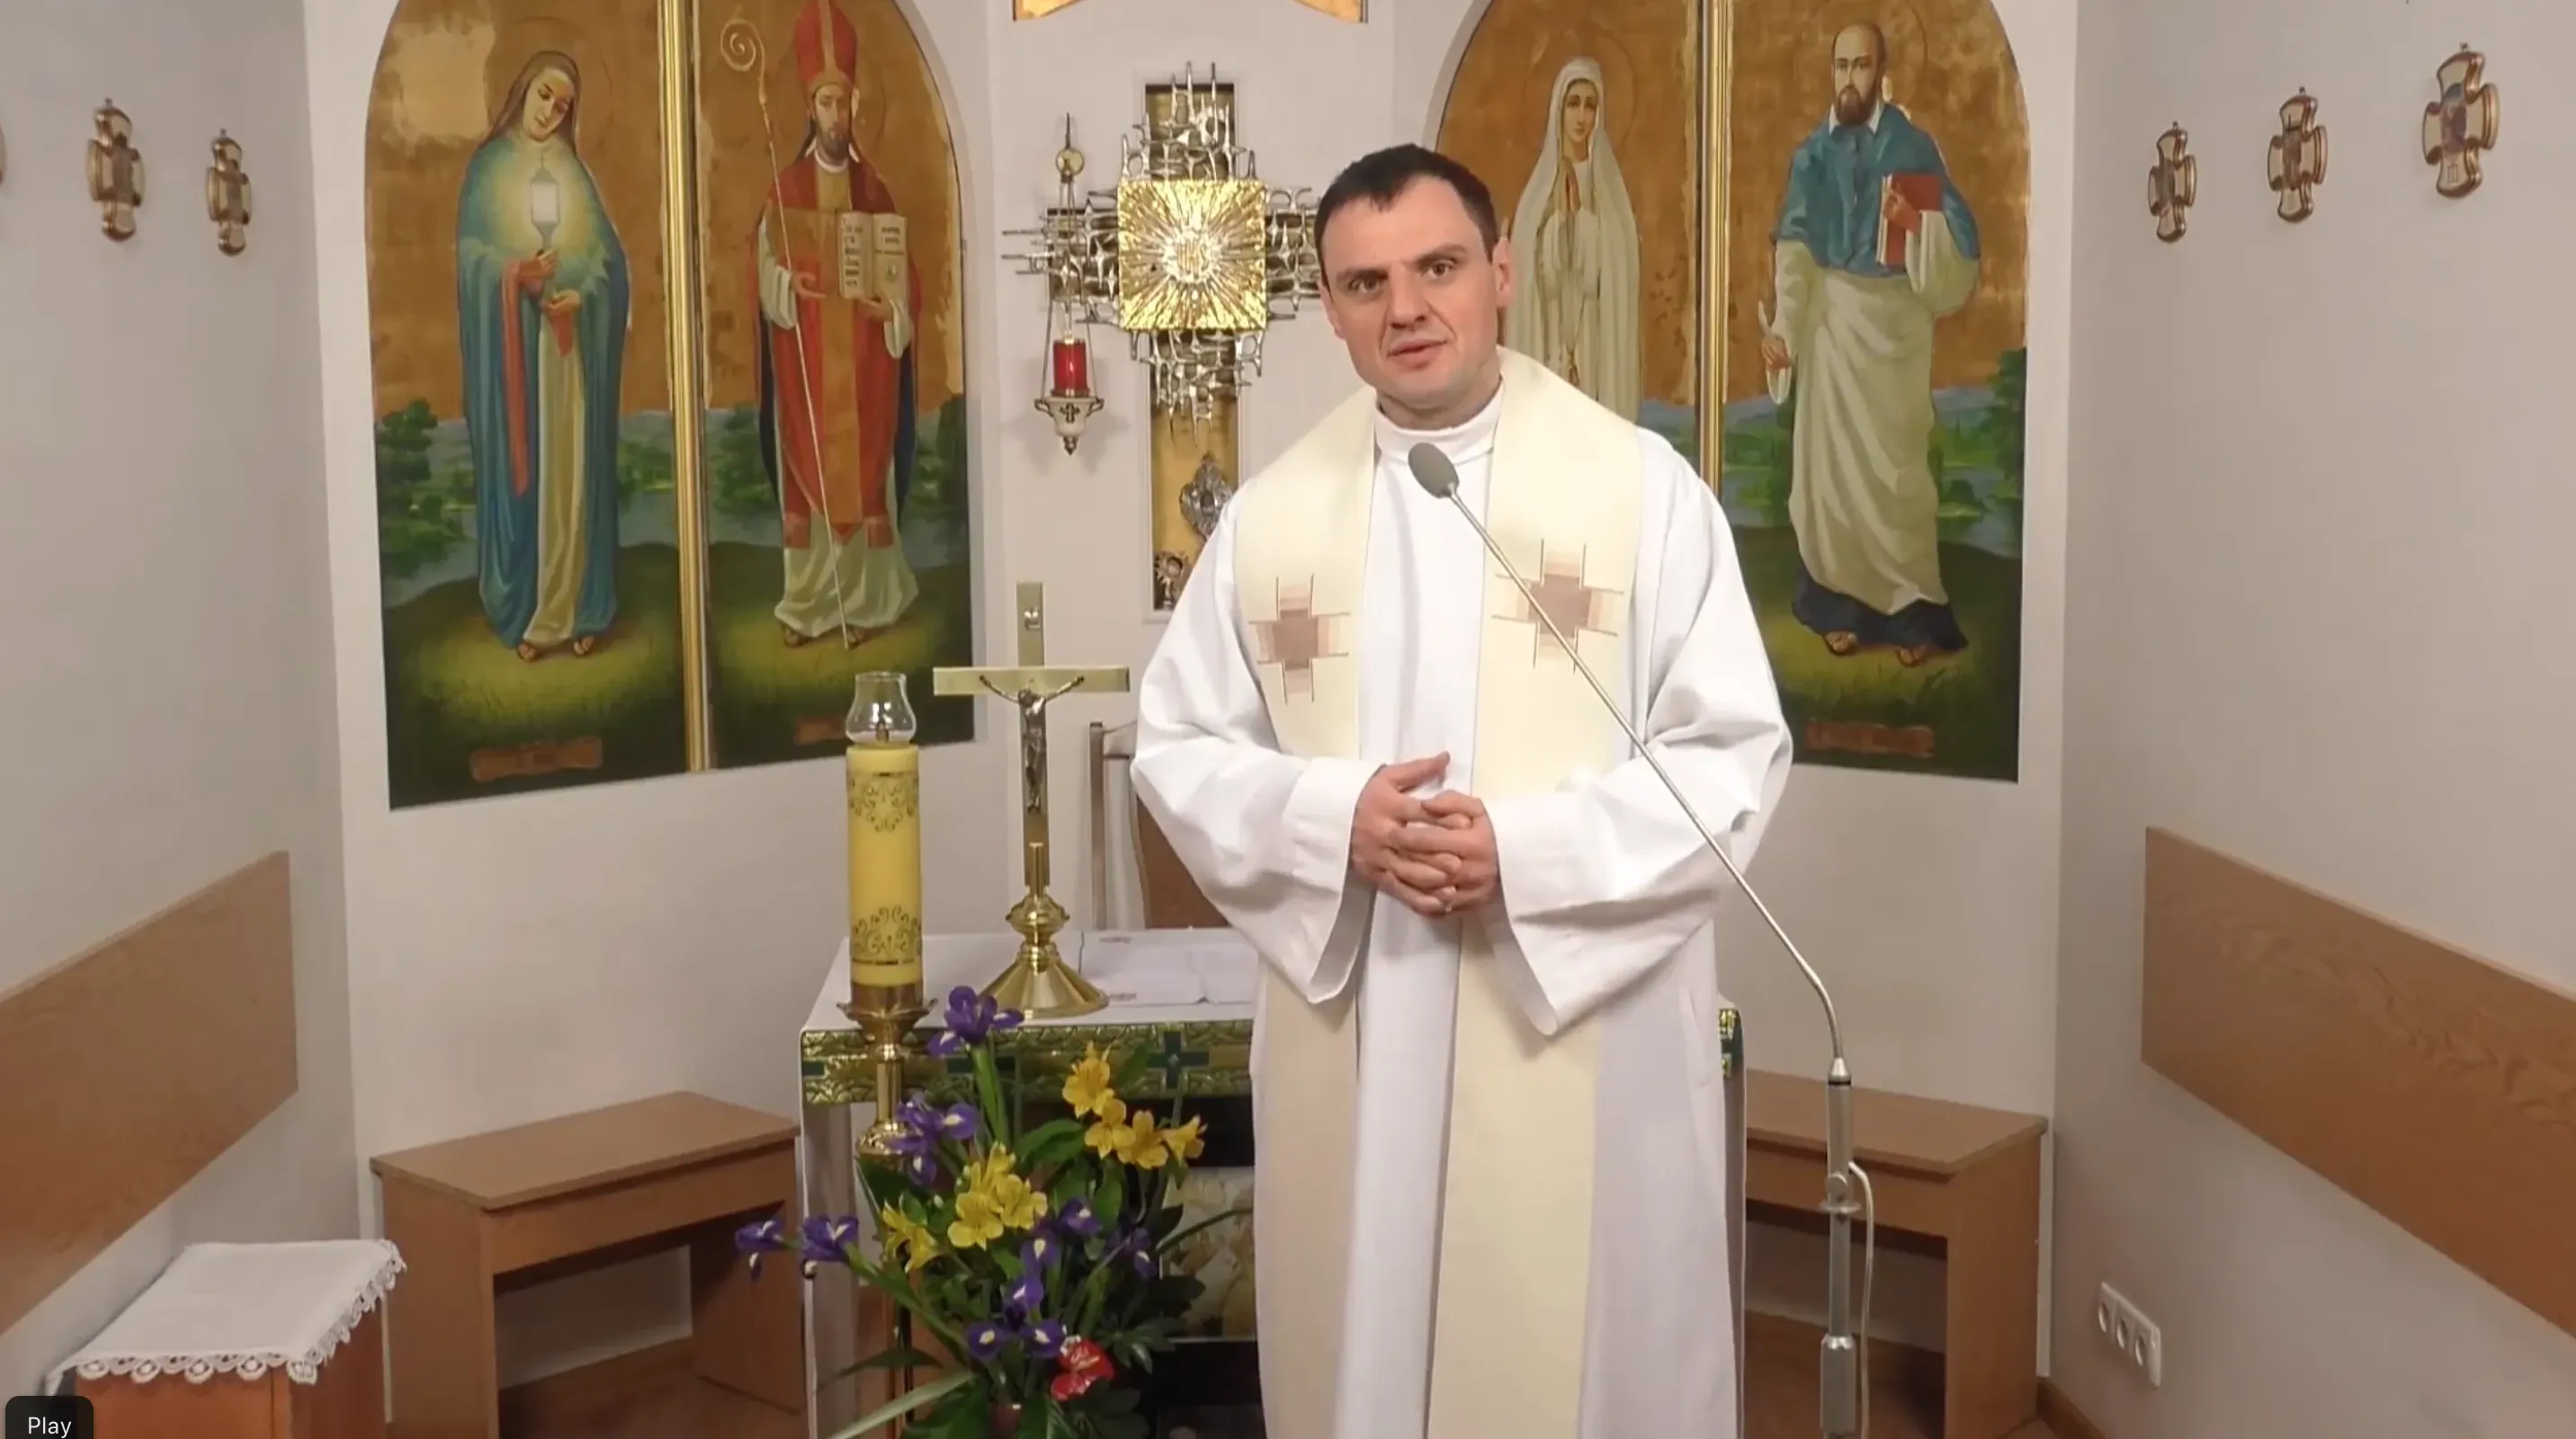 Father Oleksandr Zelinskyi, the director general of EWTN Ukraine. Screenshot of Facebook post